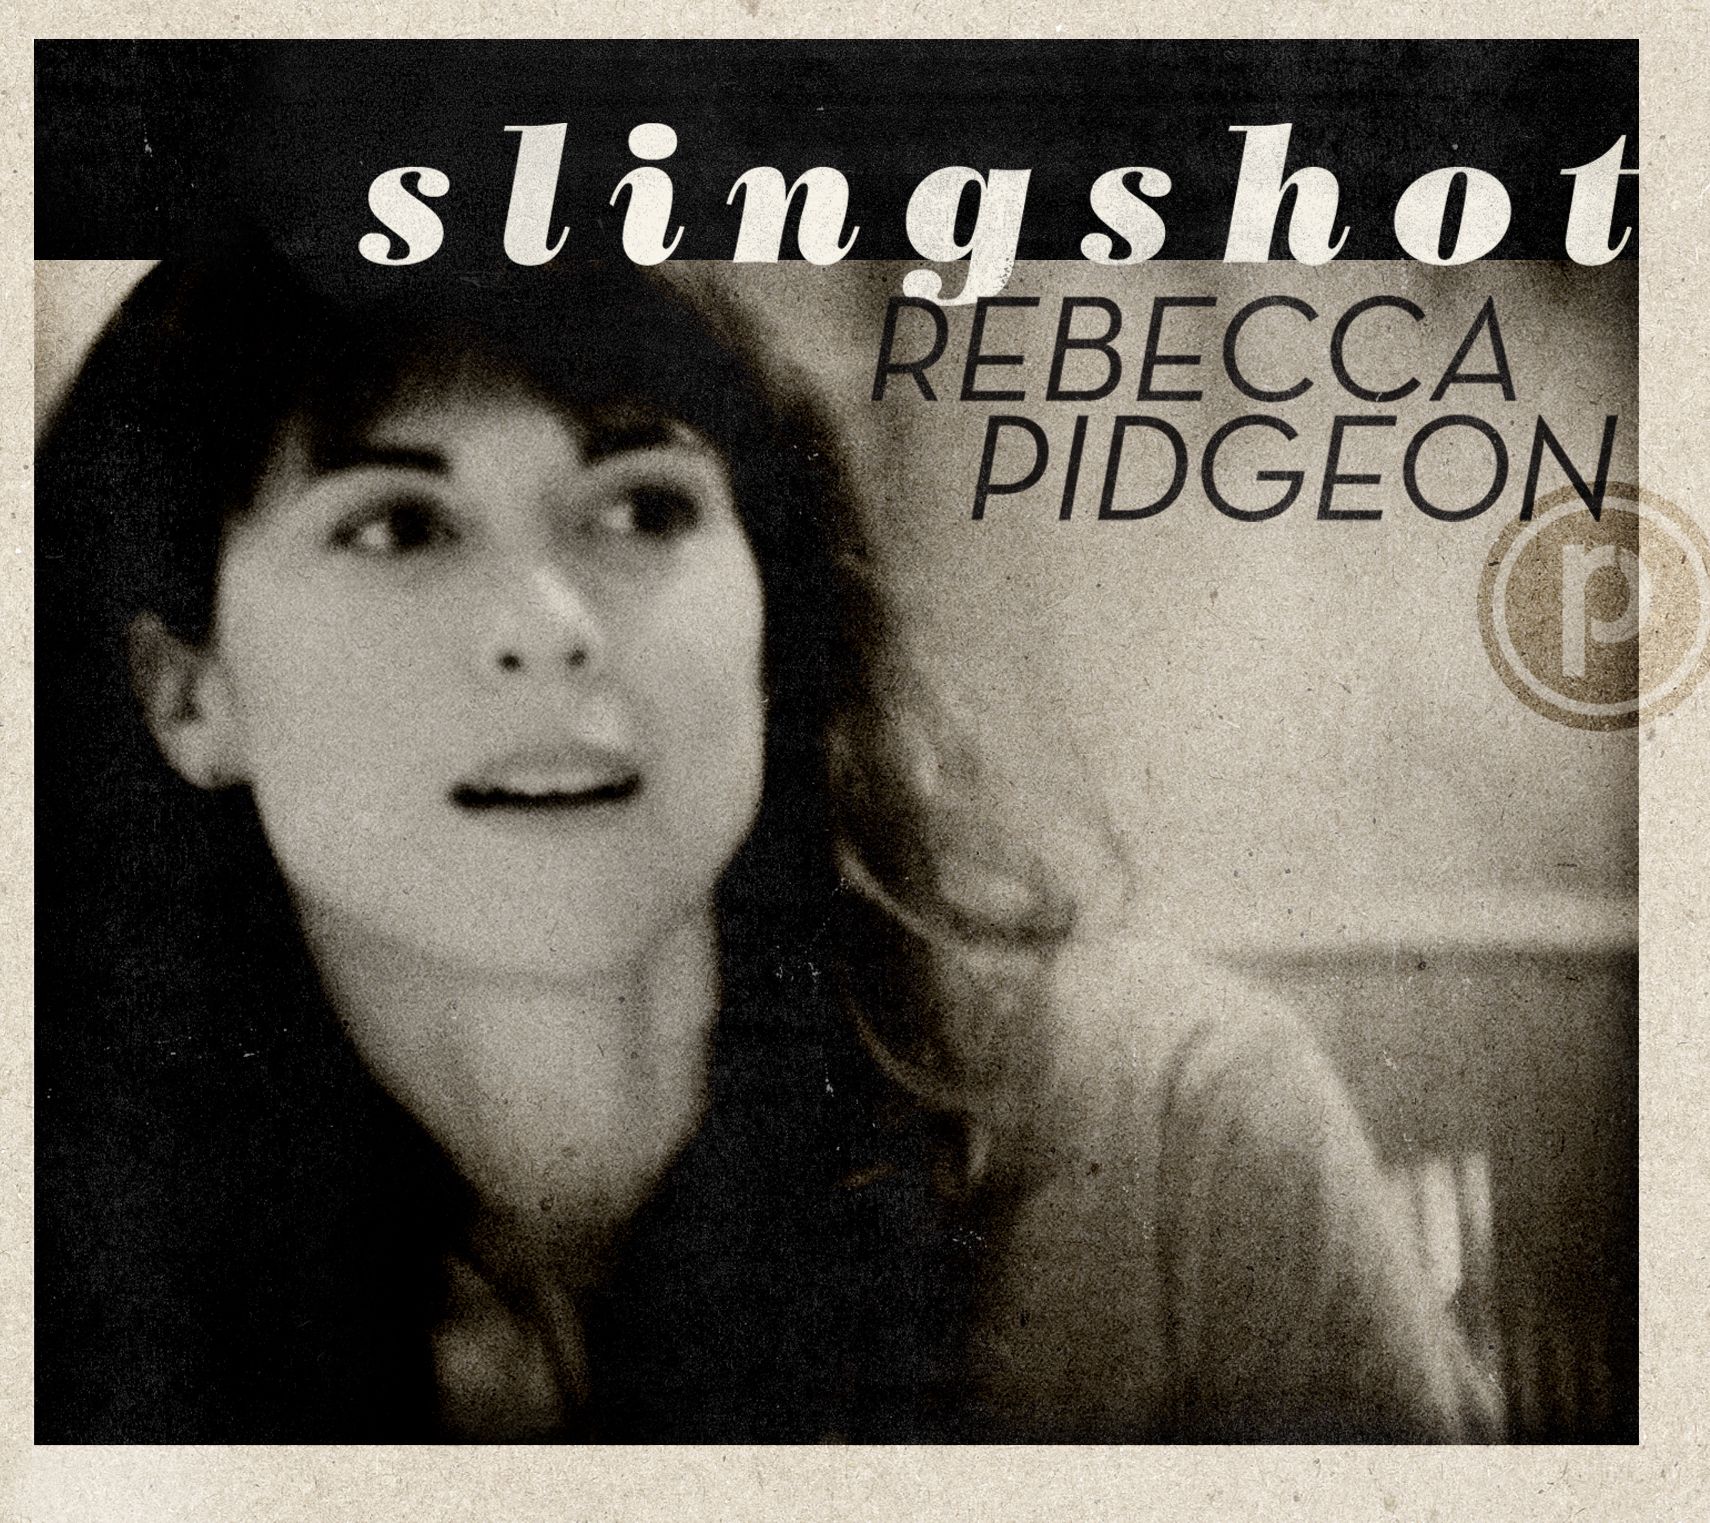 Rebecca Pidgeon. 